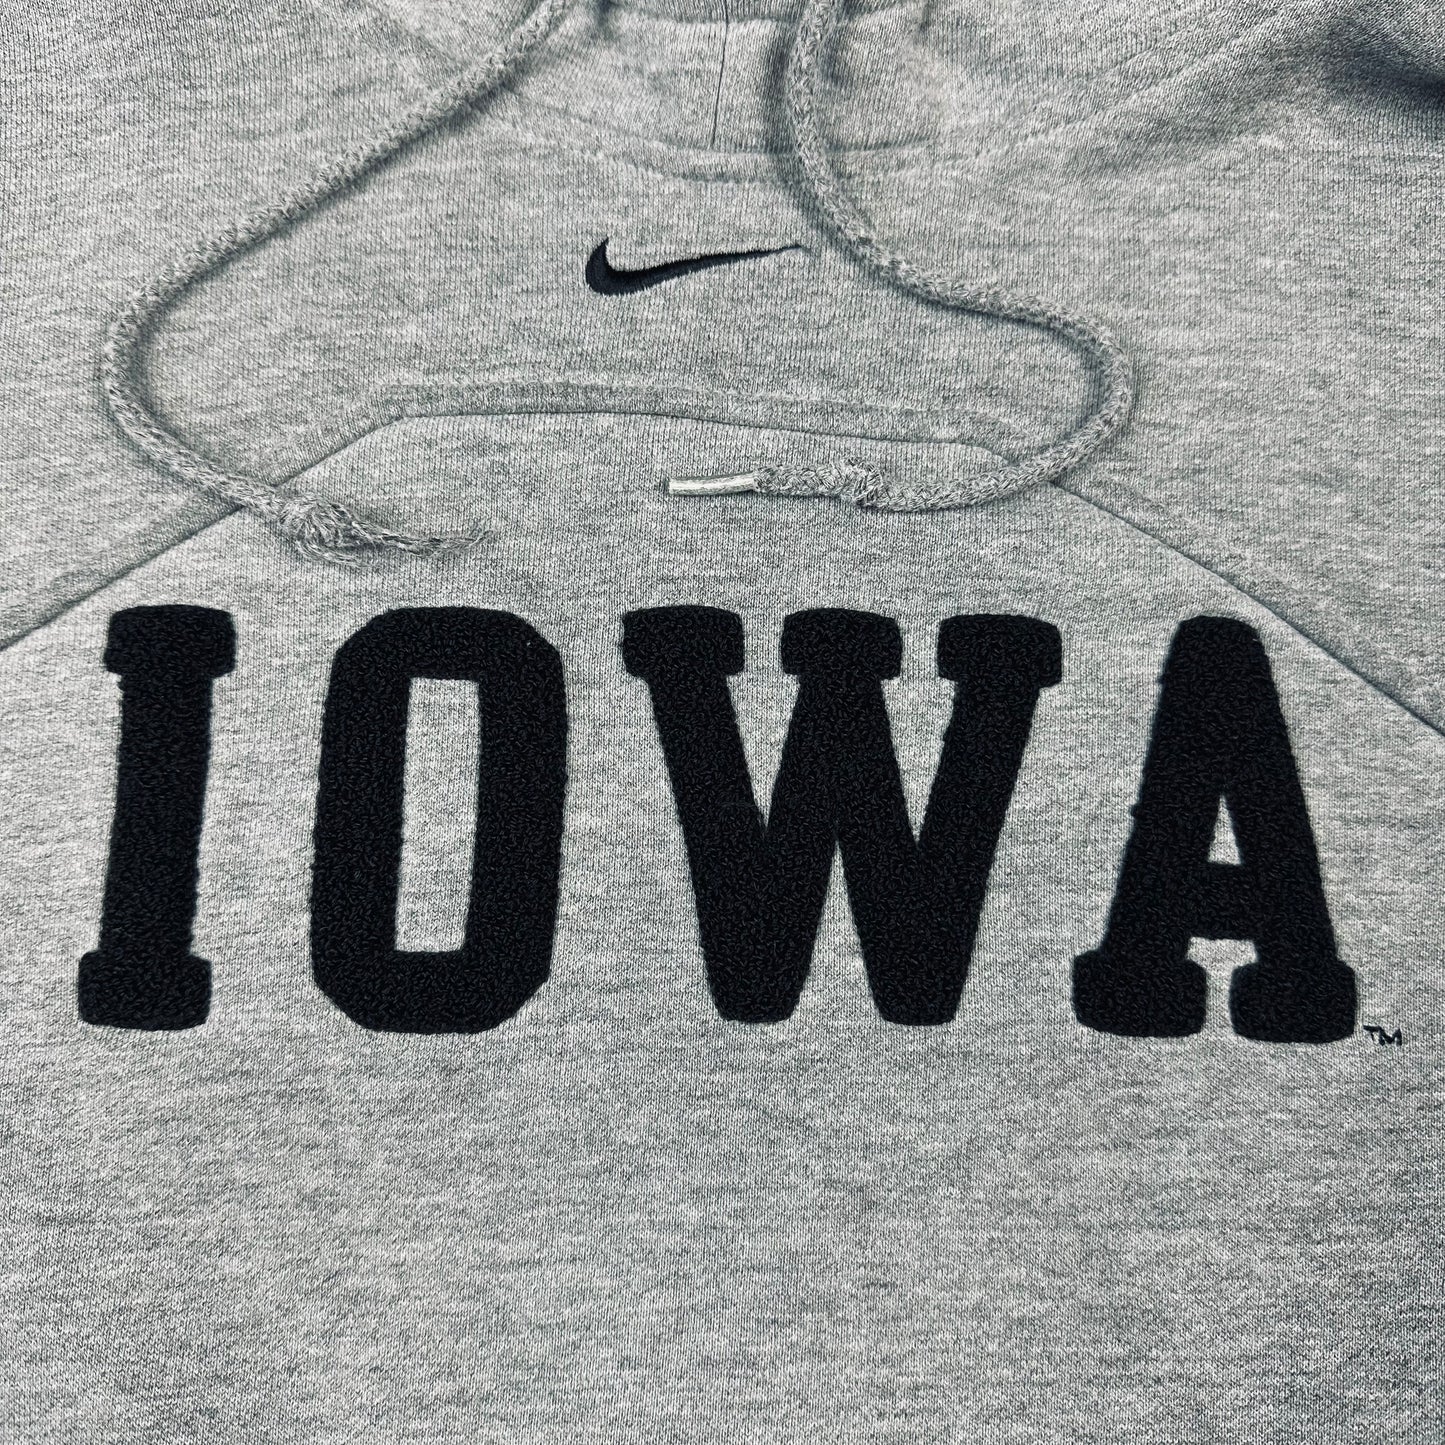 Vintage University of Iowa Gray Nike Middle Swoosh Hoodie